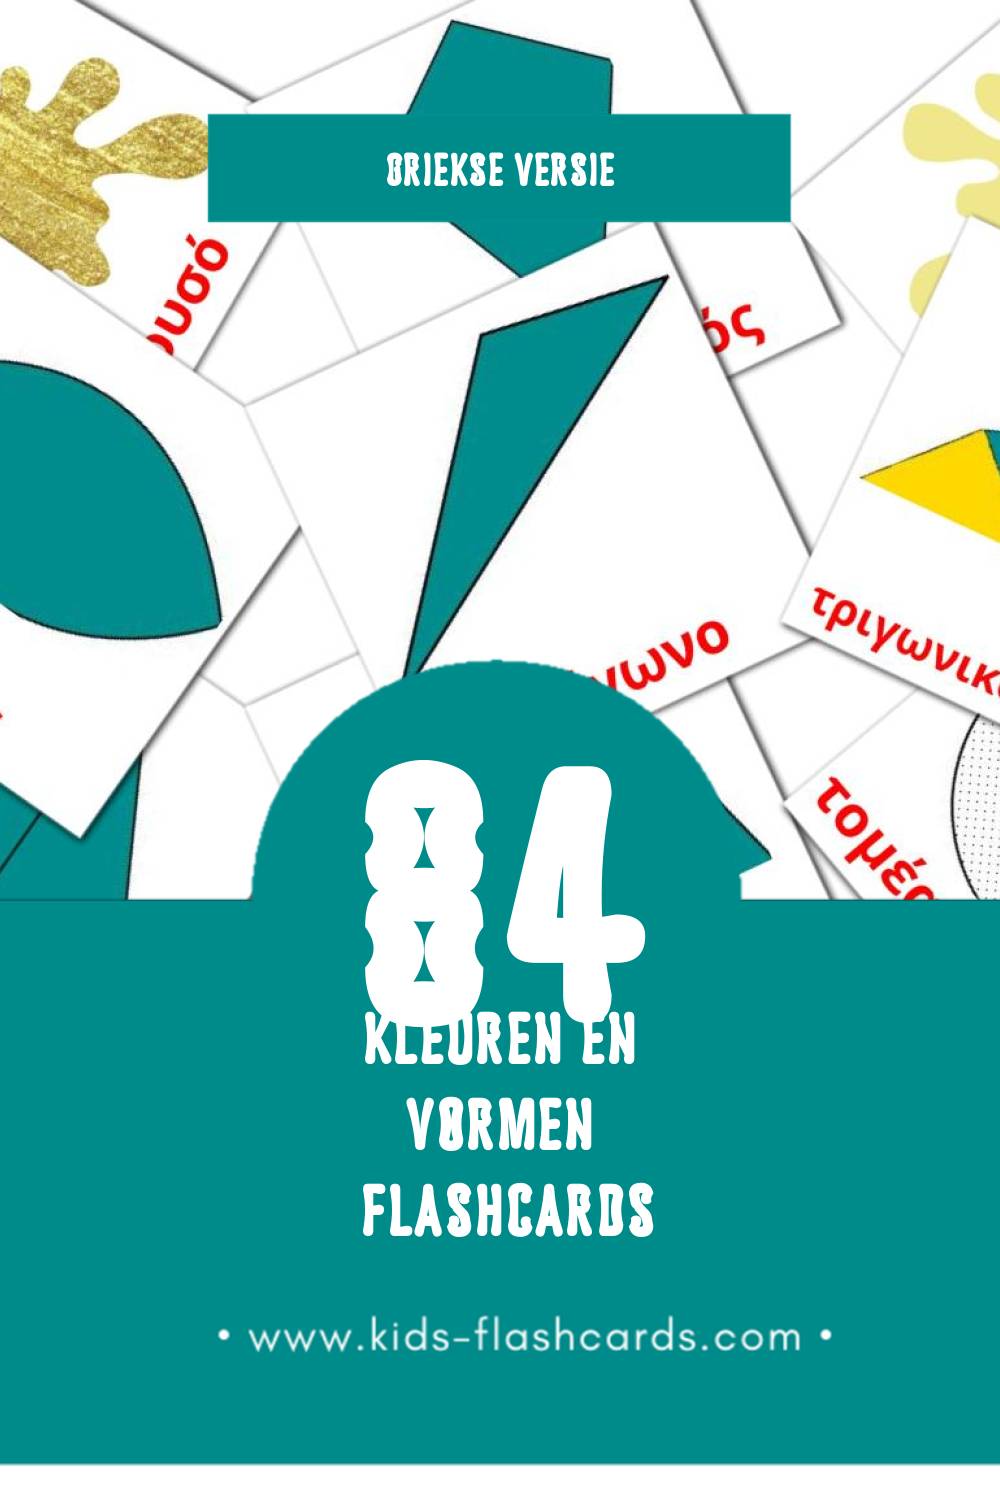 Visuele Χρώματα και σχήματα Flashcards voor Kleuters (84 kaarten in het Grieks)